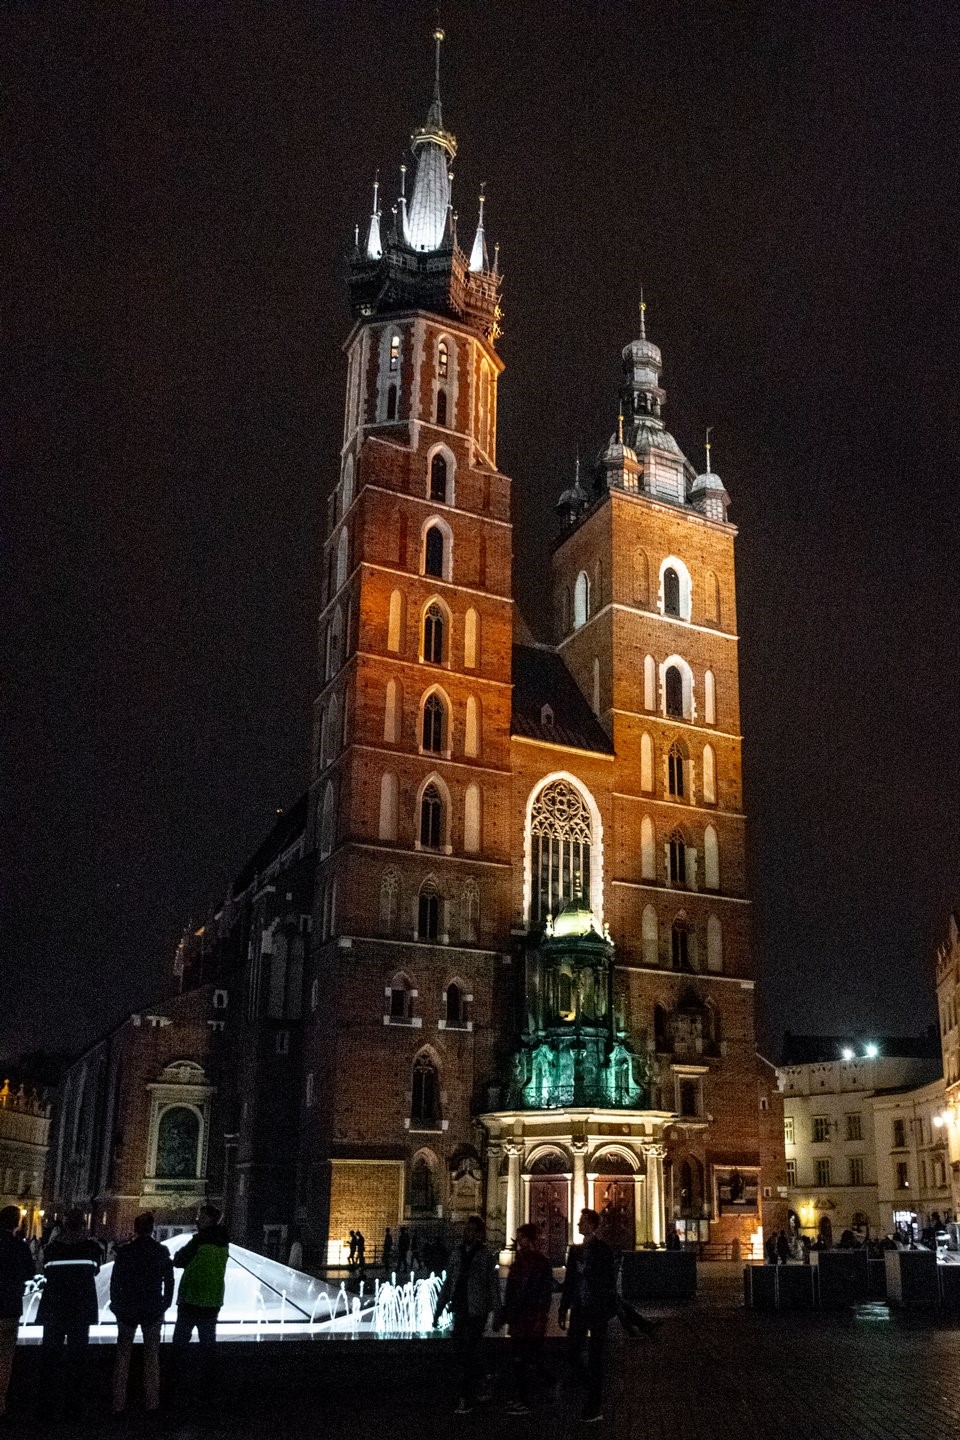 <img src="Basilica.png" alt=" Saint Mary's Basilica in Krakow">